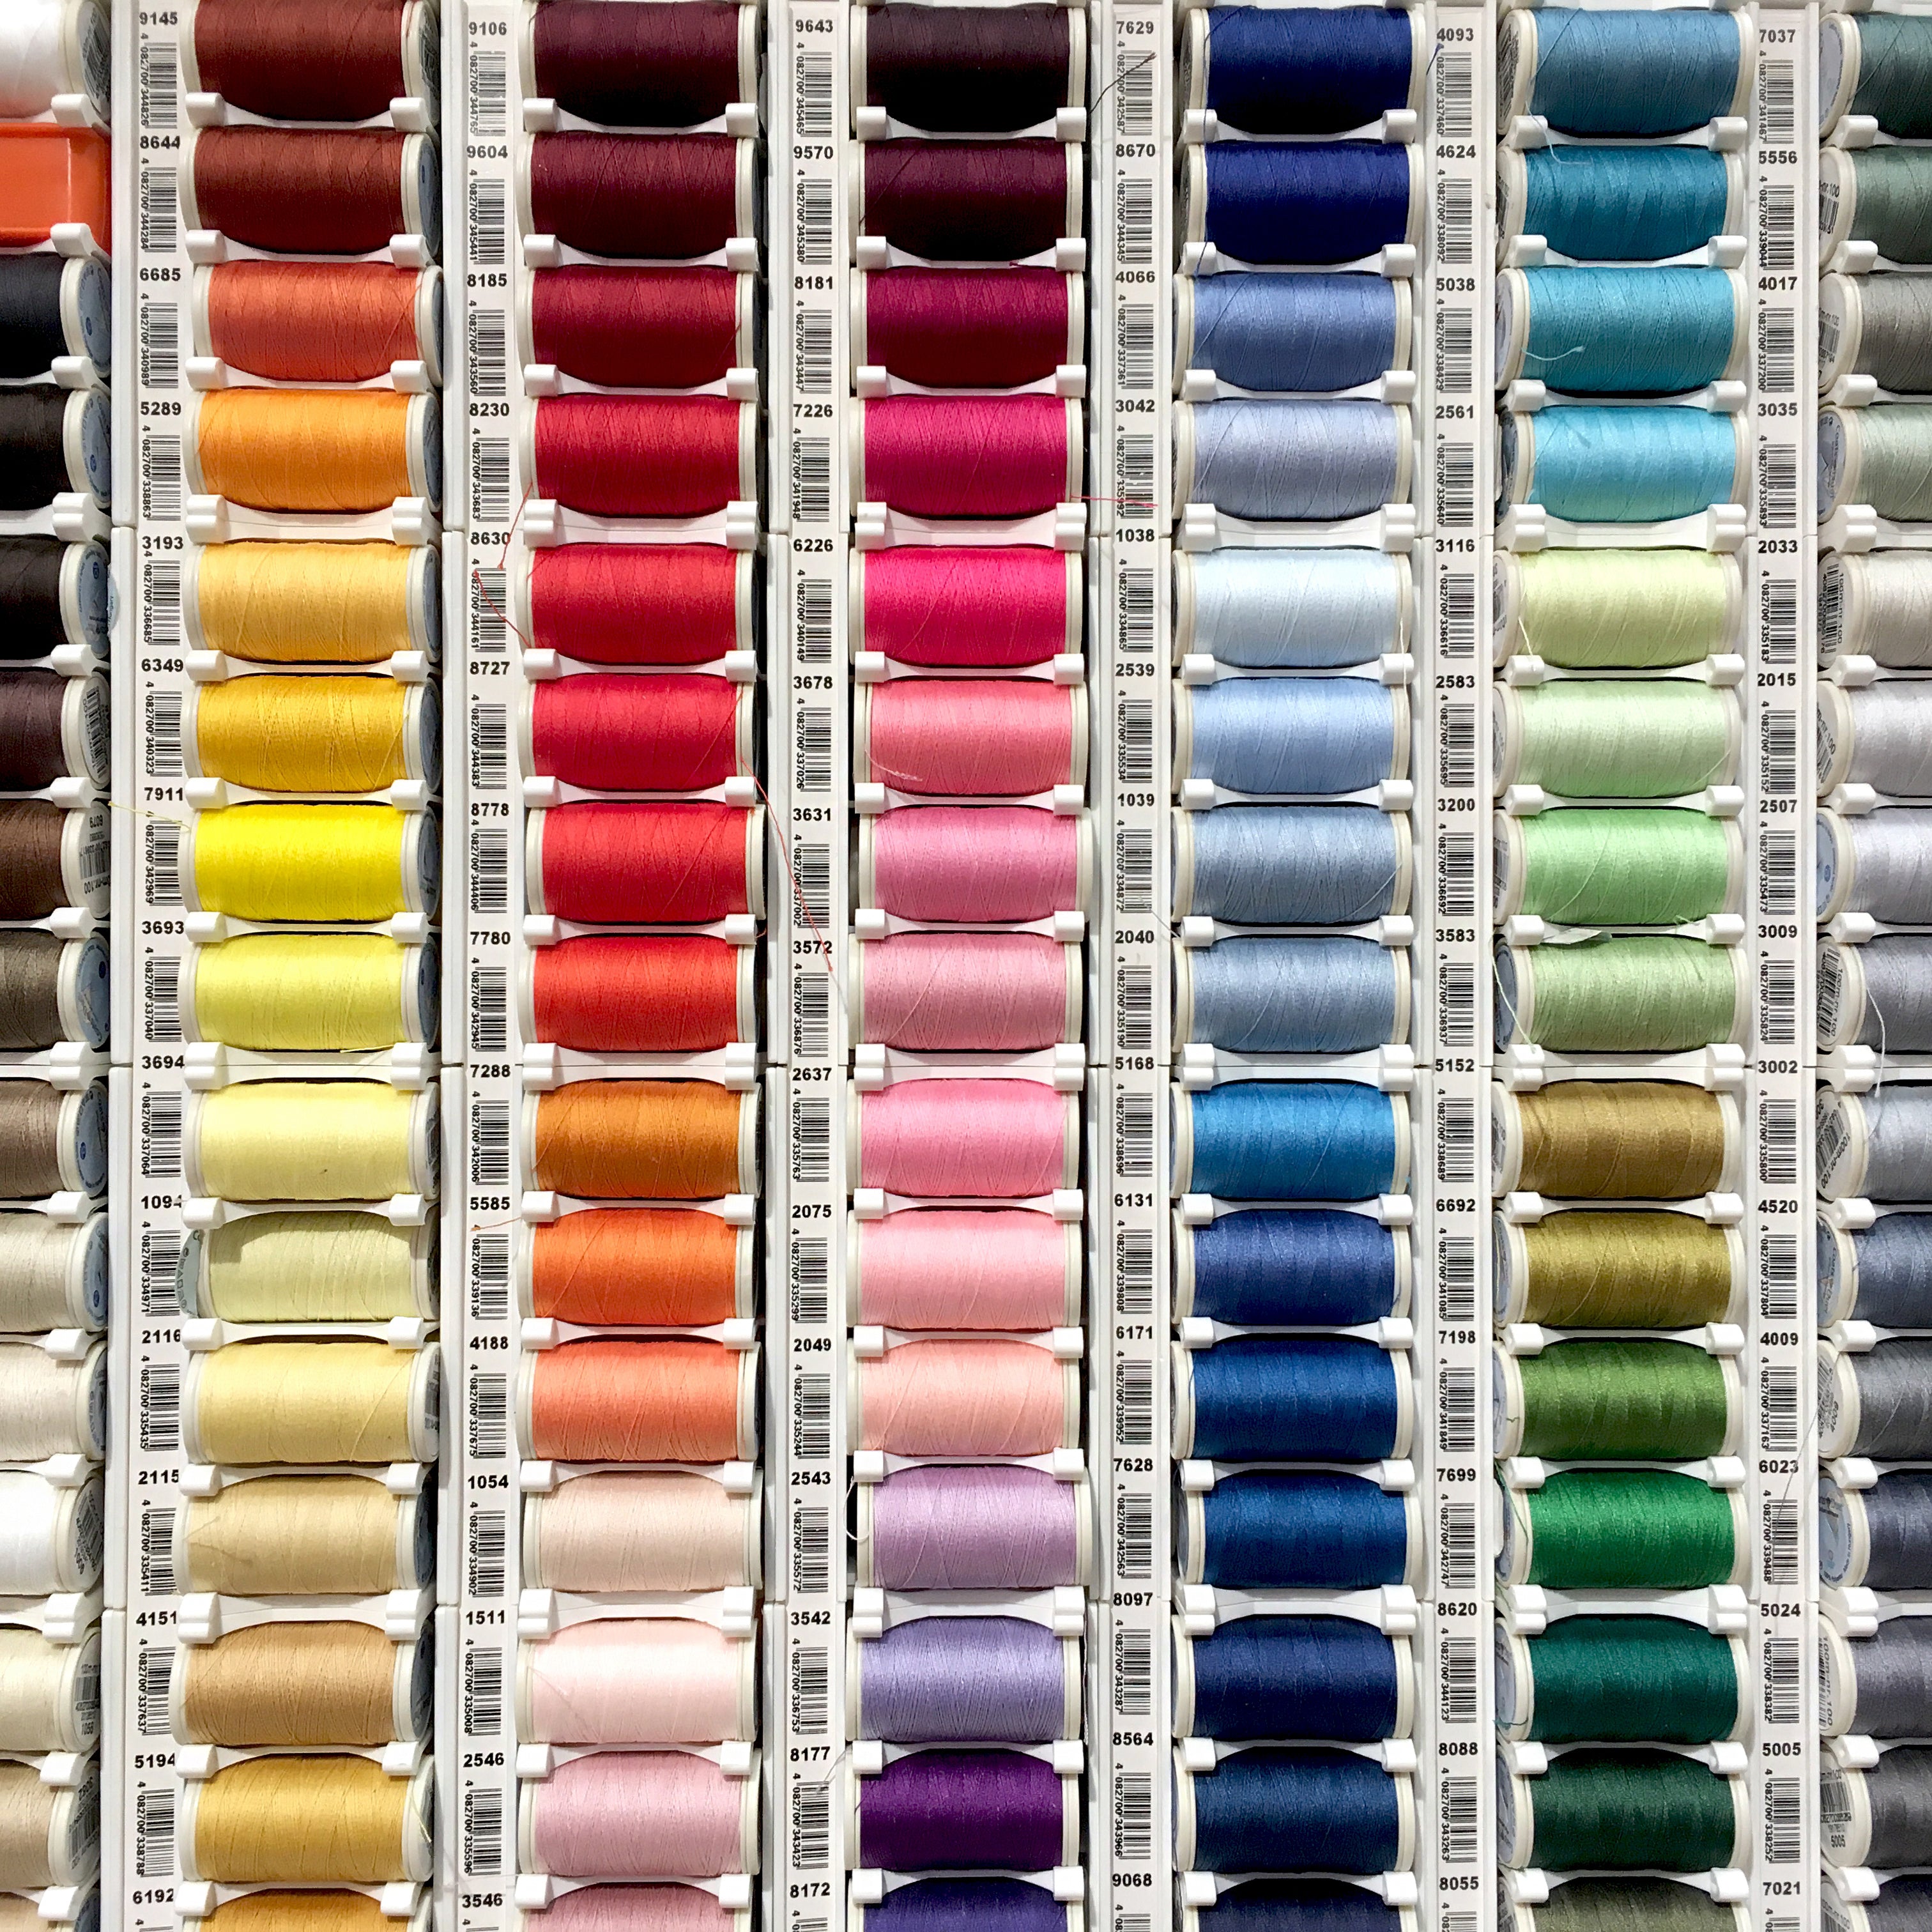 colorful-sewing-thread-2022-11-15-11-20-39-utc - Tag&Crew